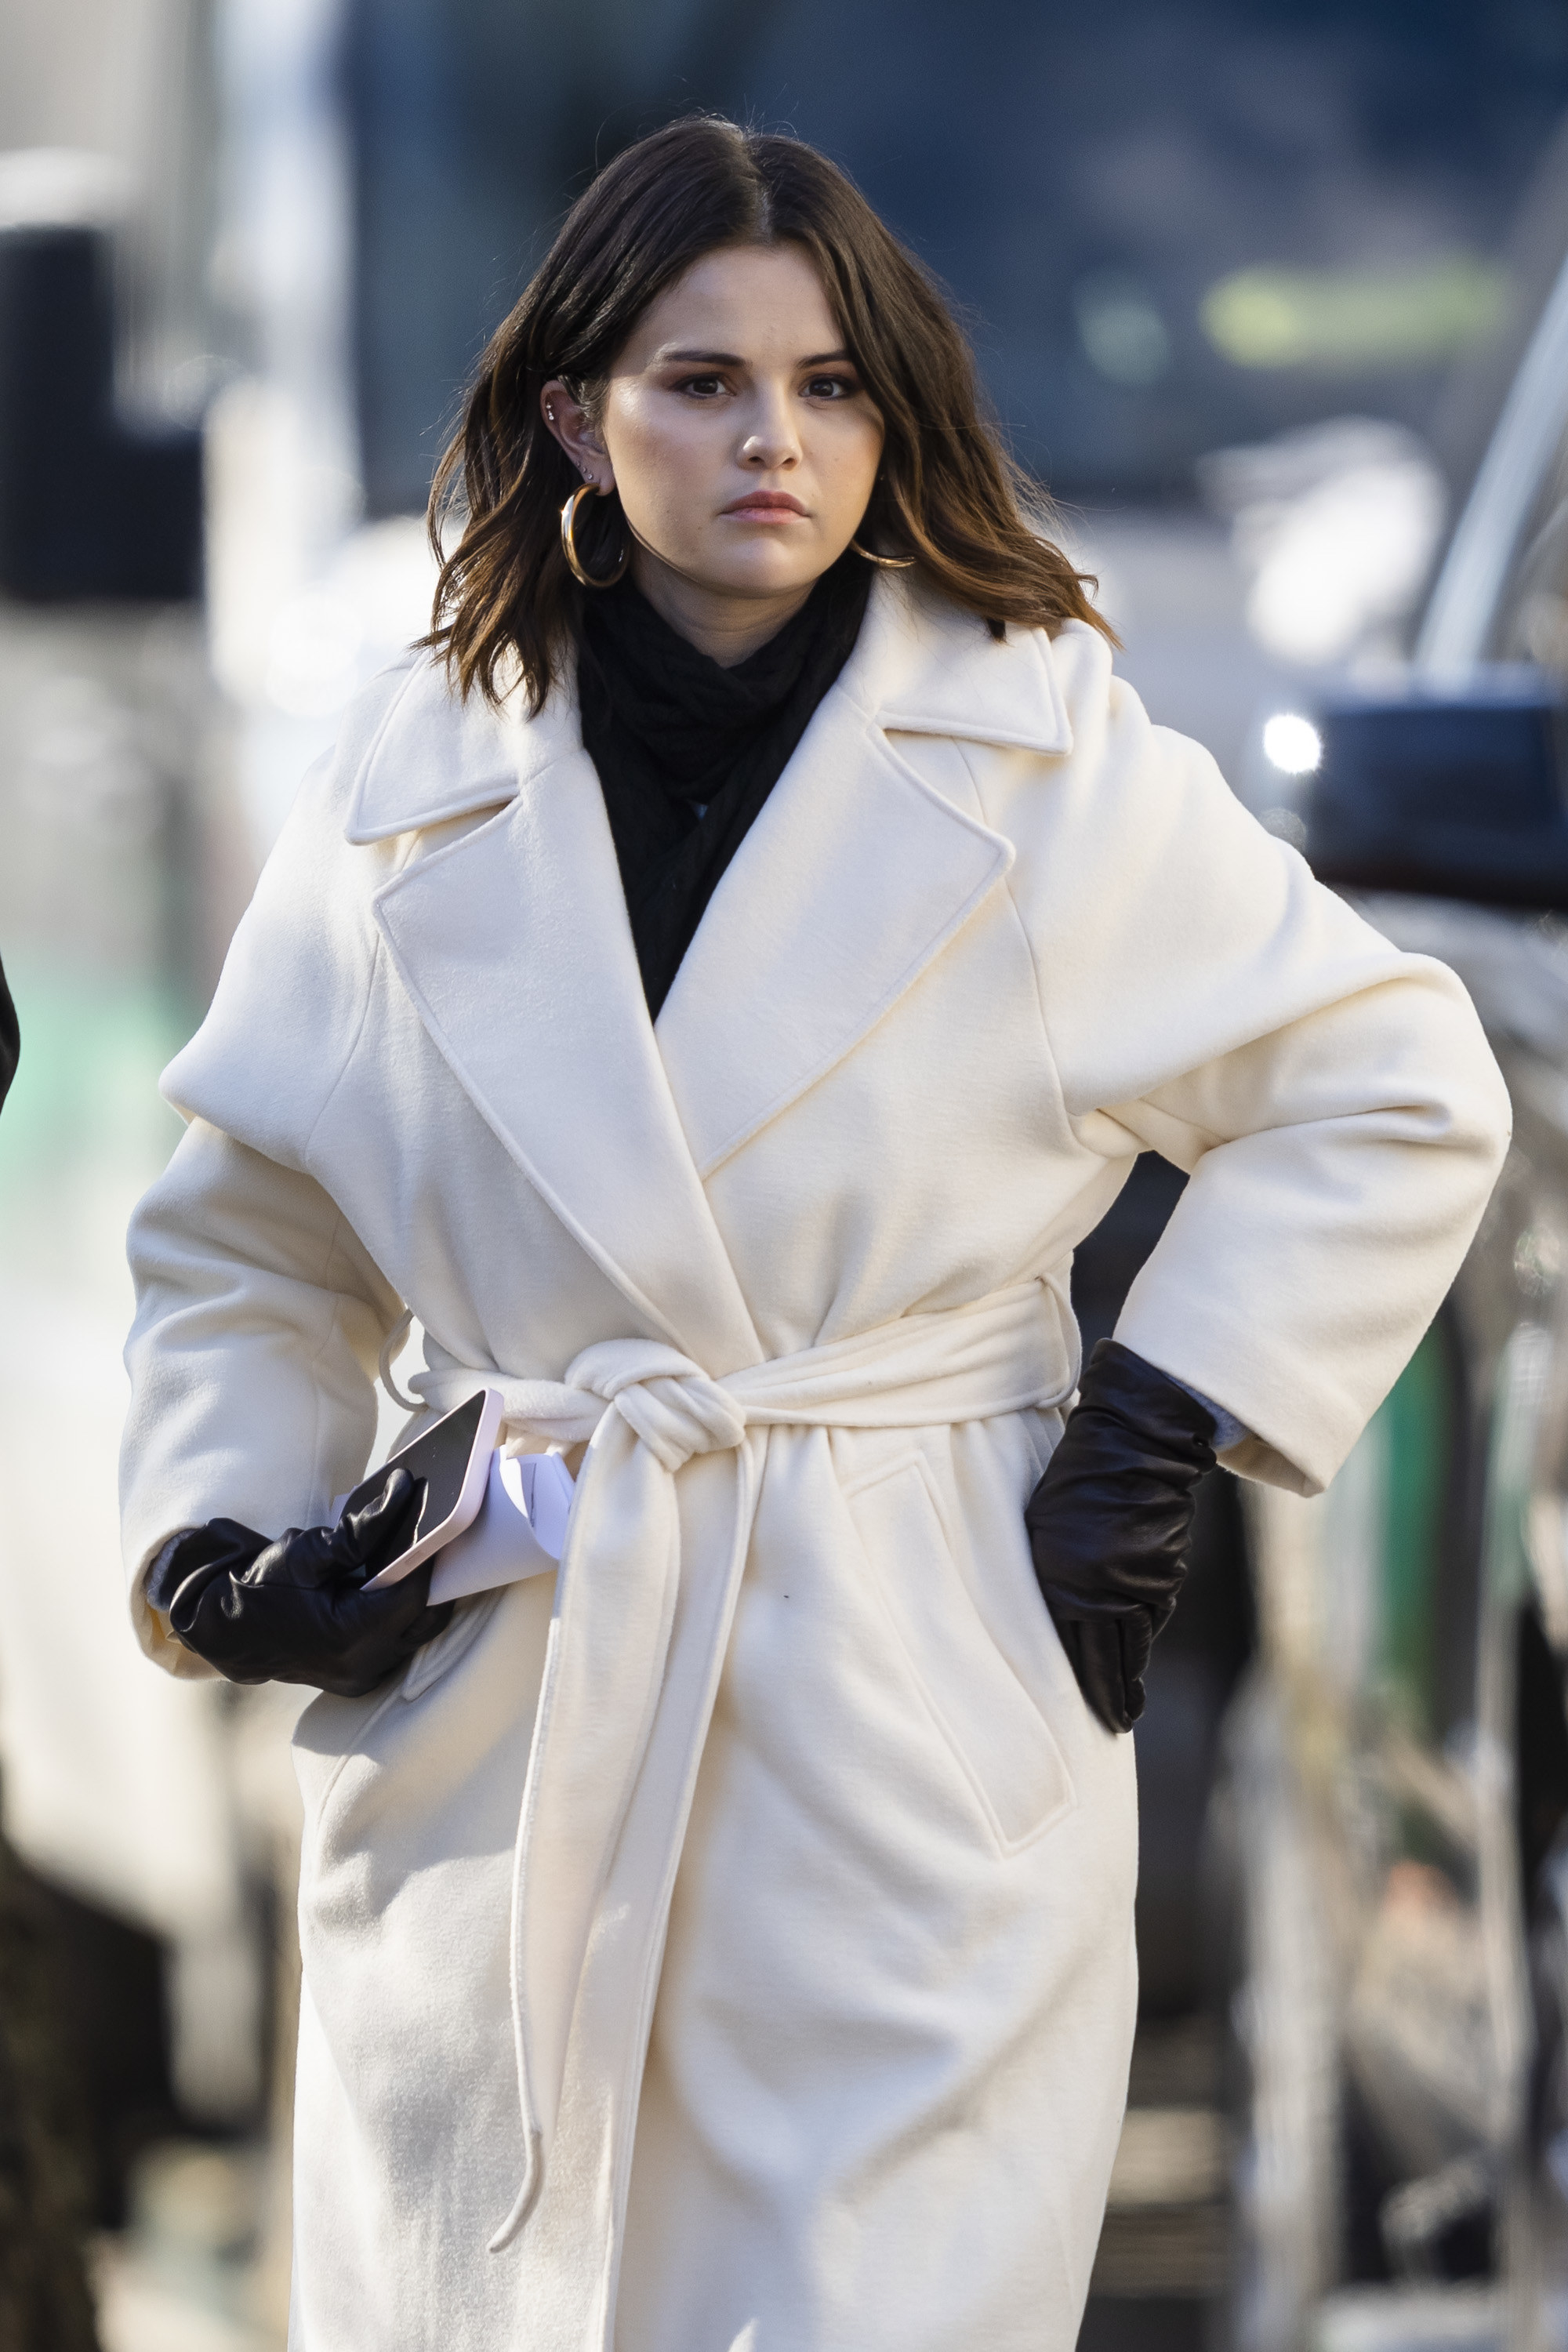 Selena walking outside as she wears a big coat and gloves